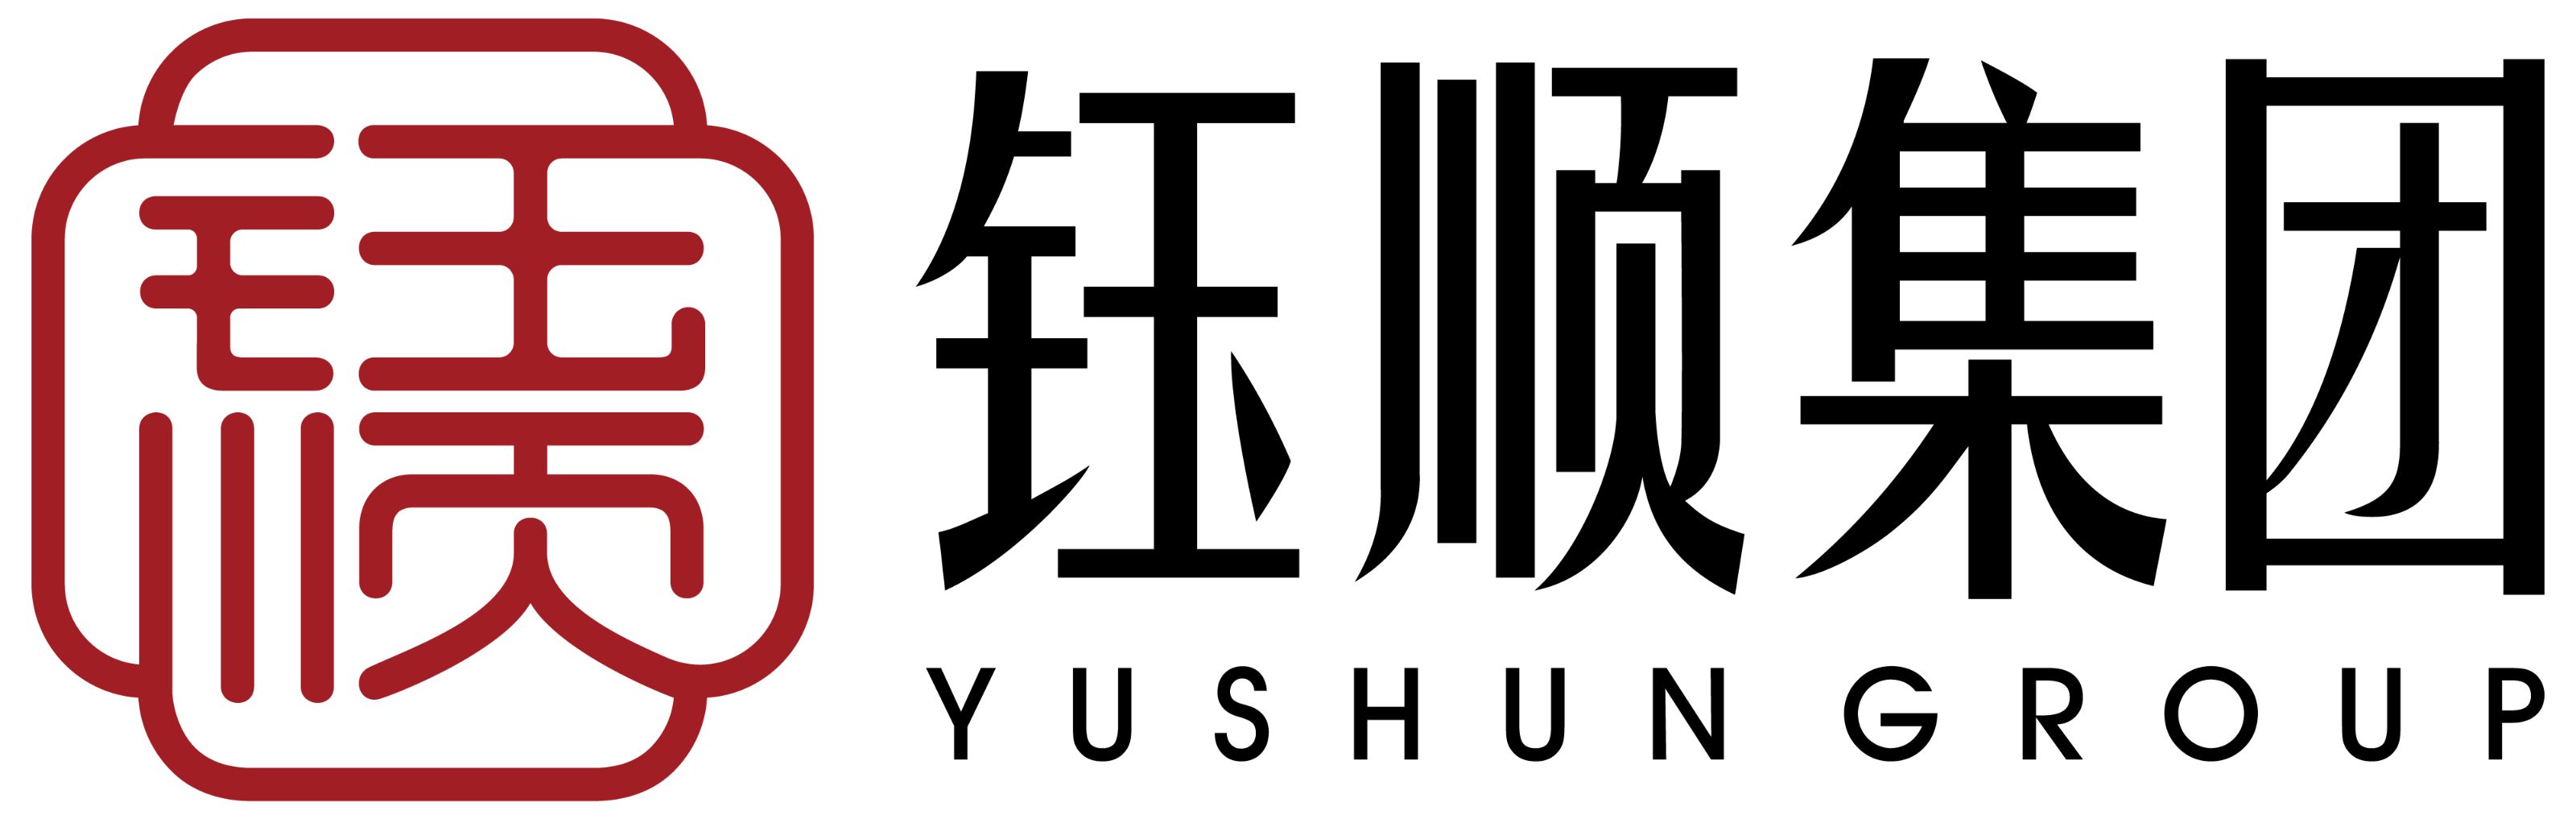 Guangzhou Yushun Technology Information Service Group Co., Ltd logo